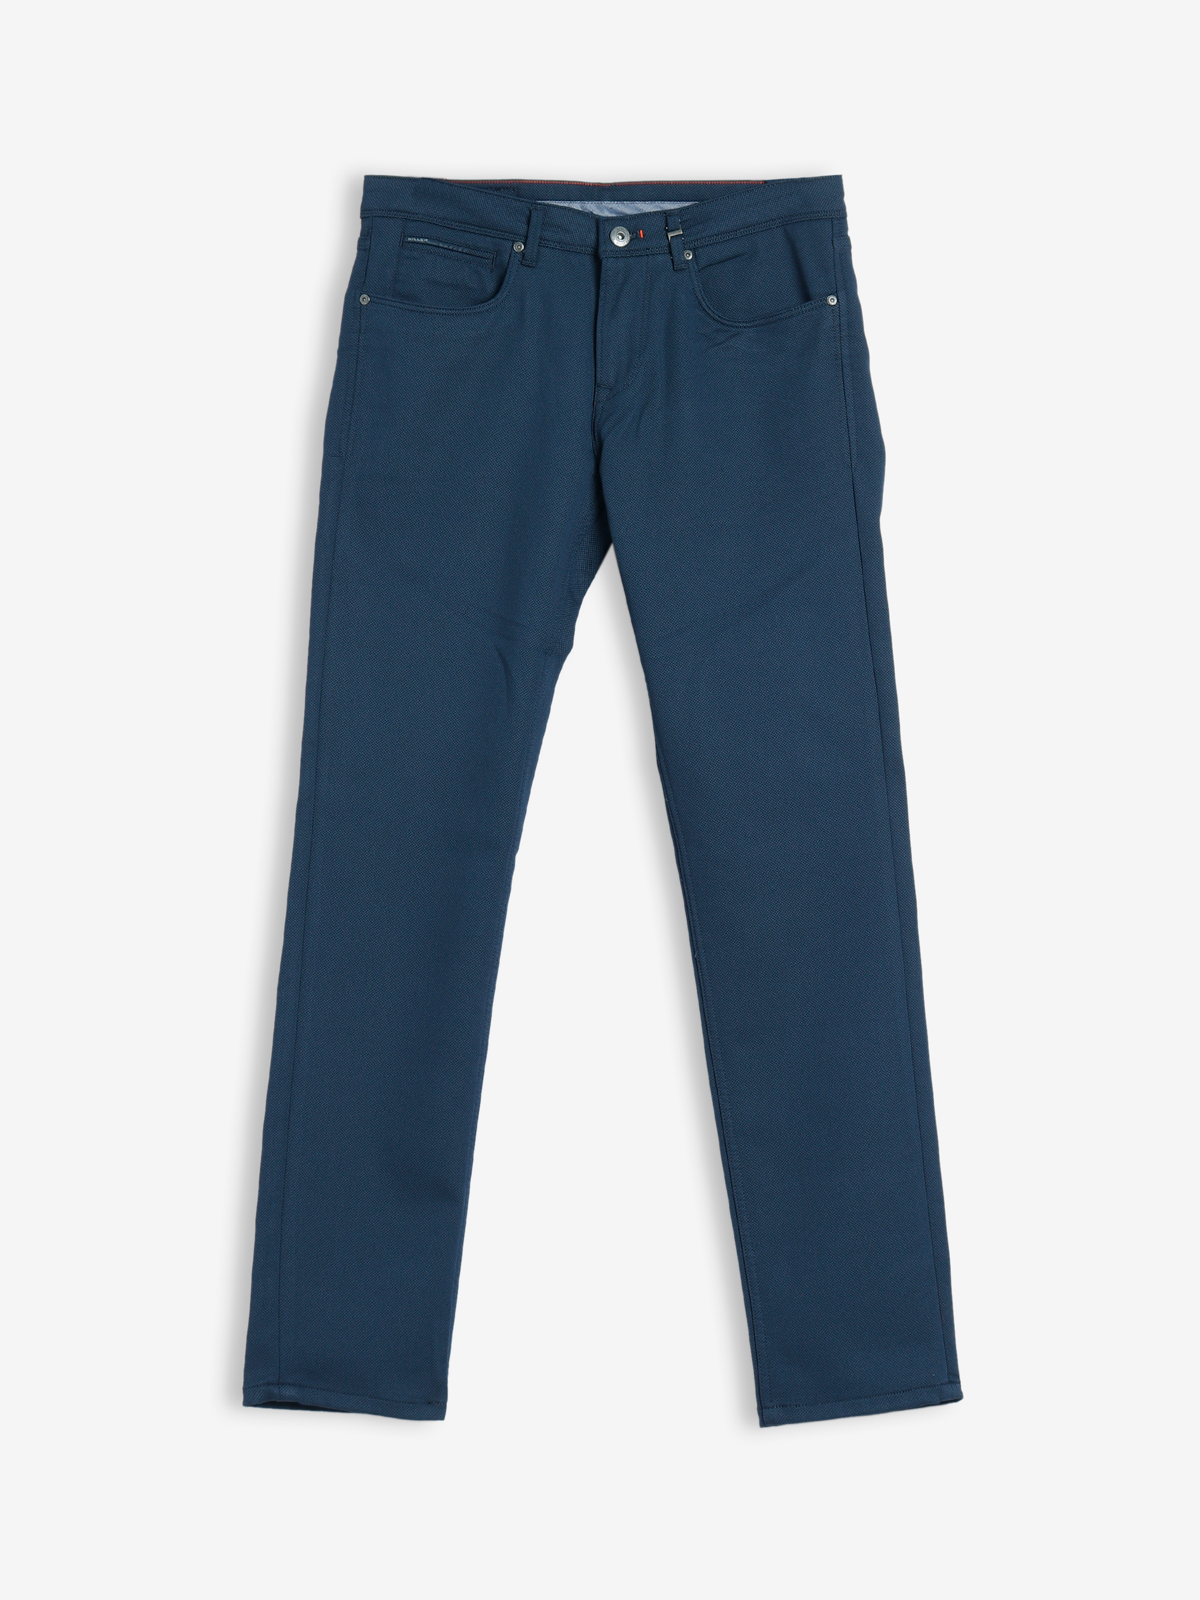 Buy killer jeans pant for man regular fit in India @ Limeroad